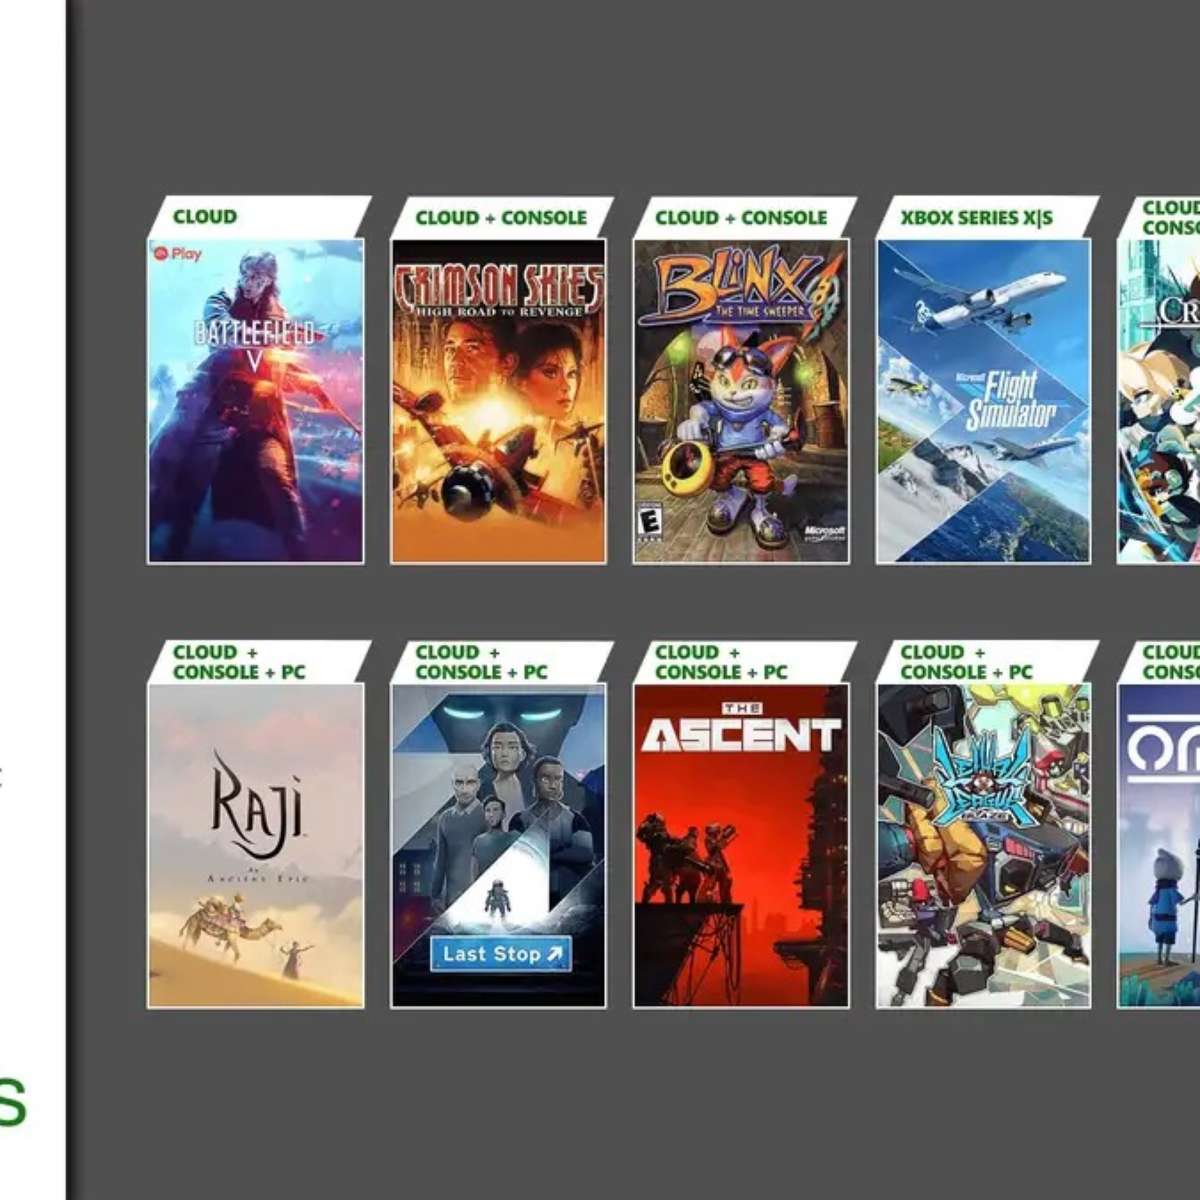 Xbox listou 55 jogos que chegam nos próximos 12 meses, 43 deles